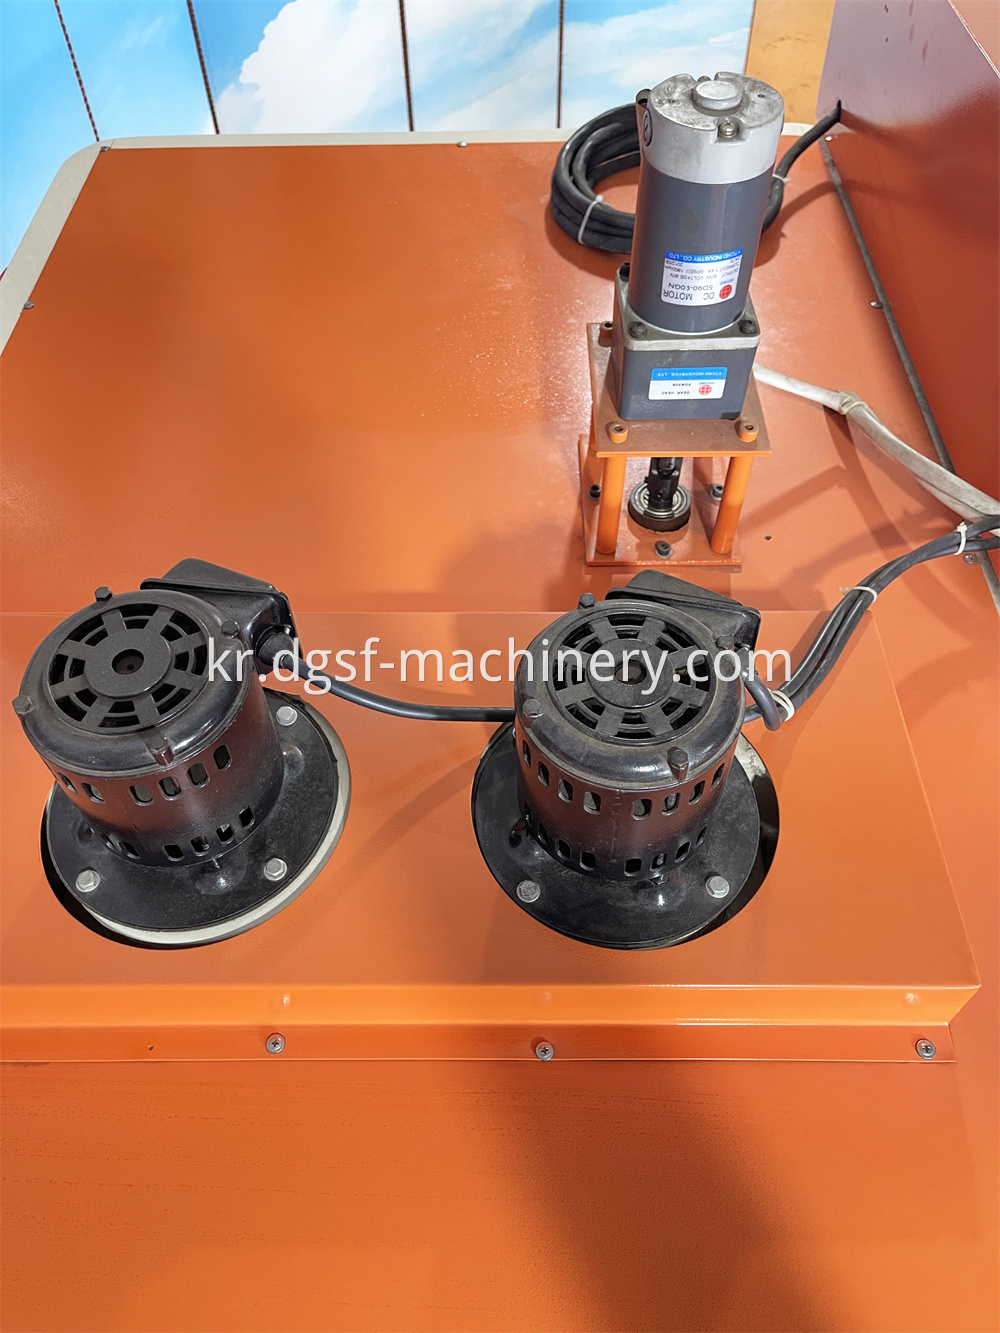 Rotary Type Nir Drying Machine For Leather Belt Edge Coloring Yf 171 6 Jpg